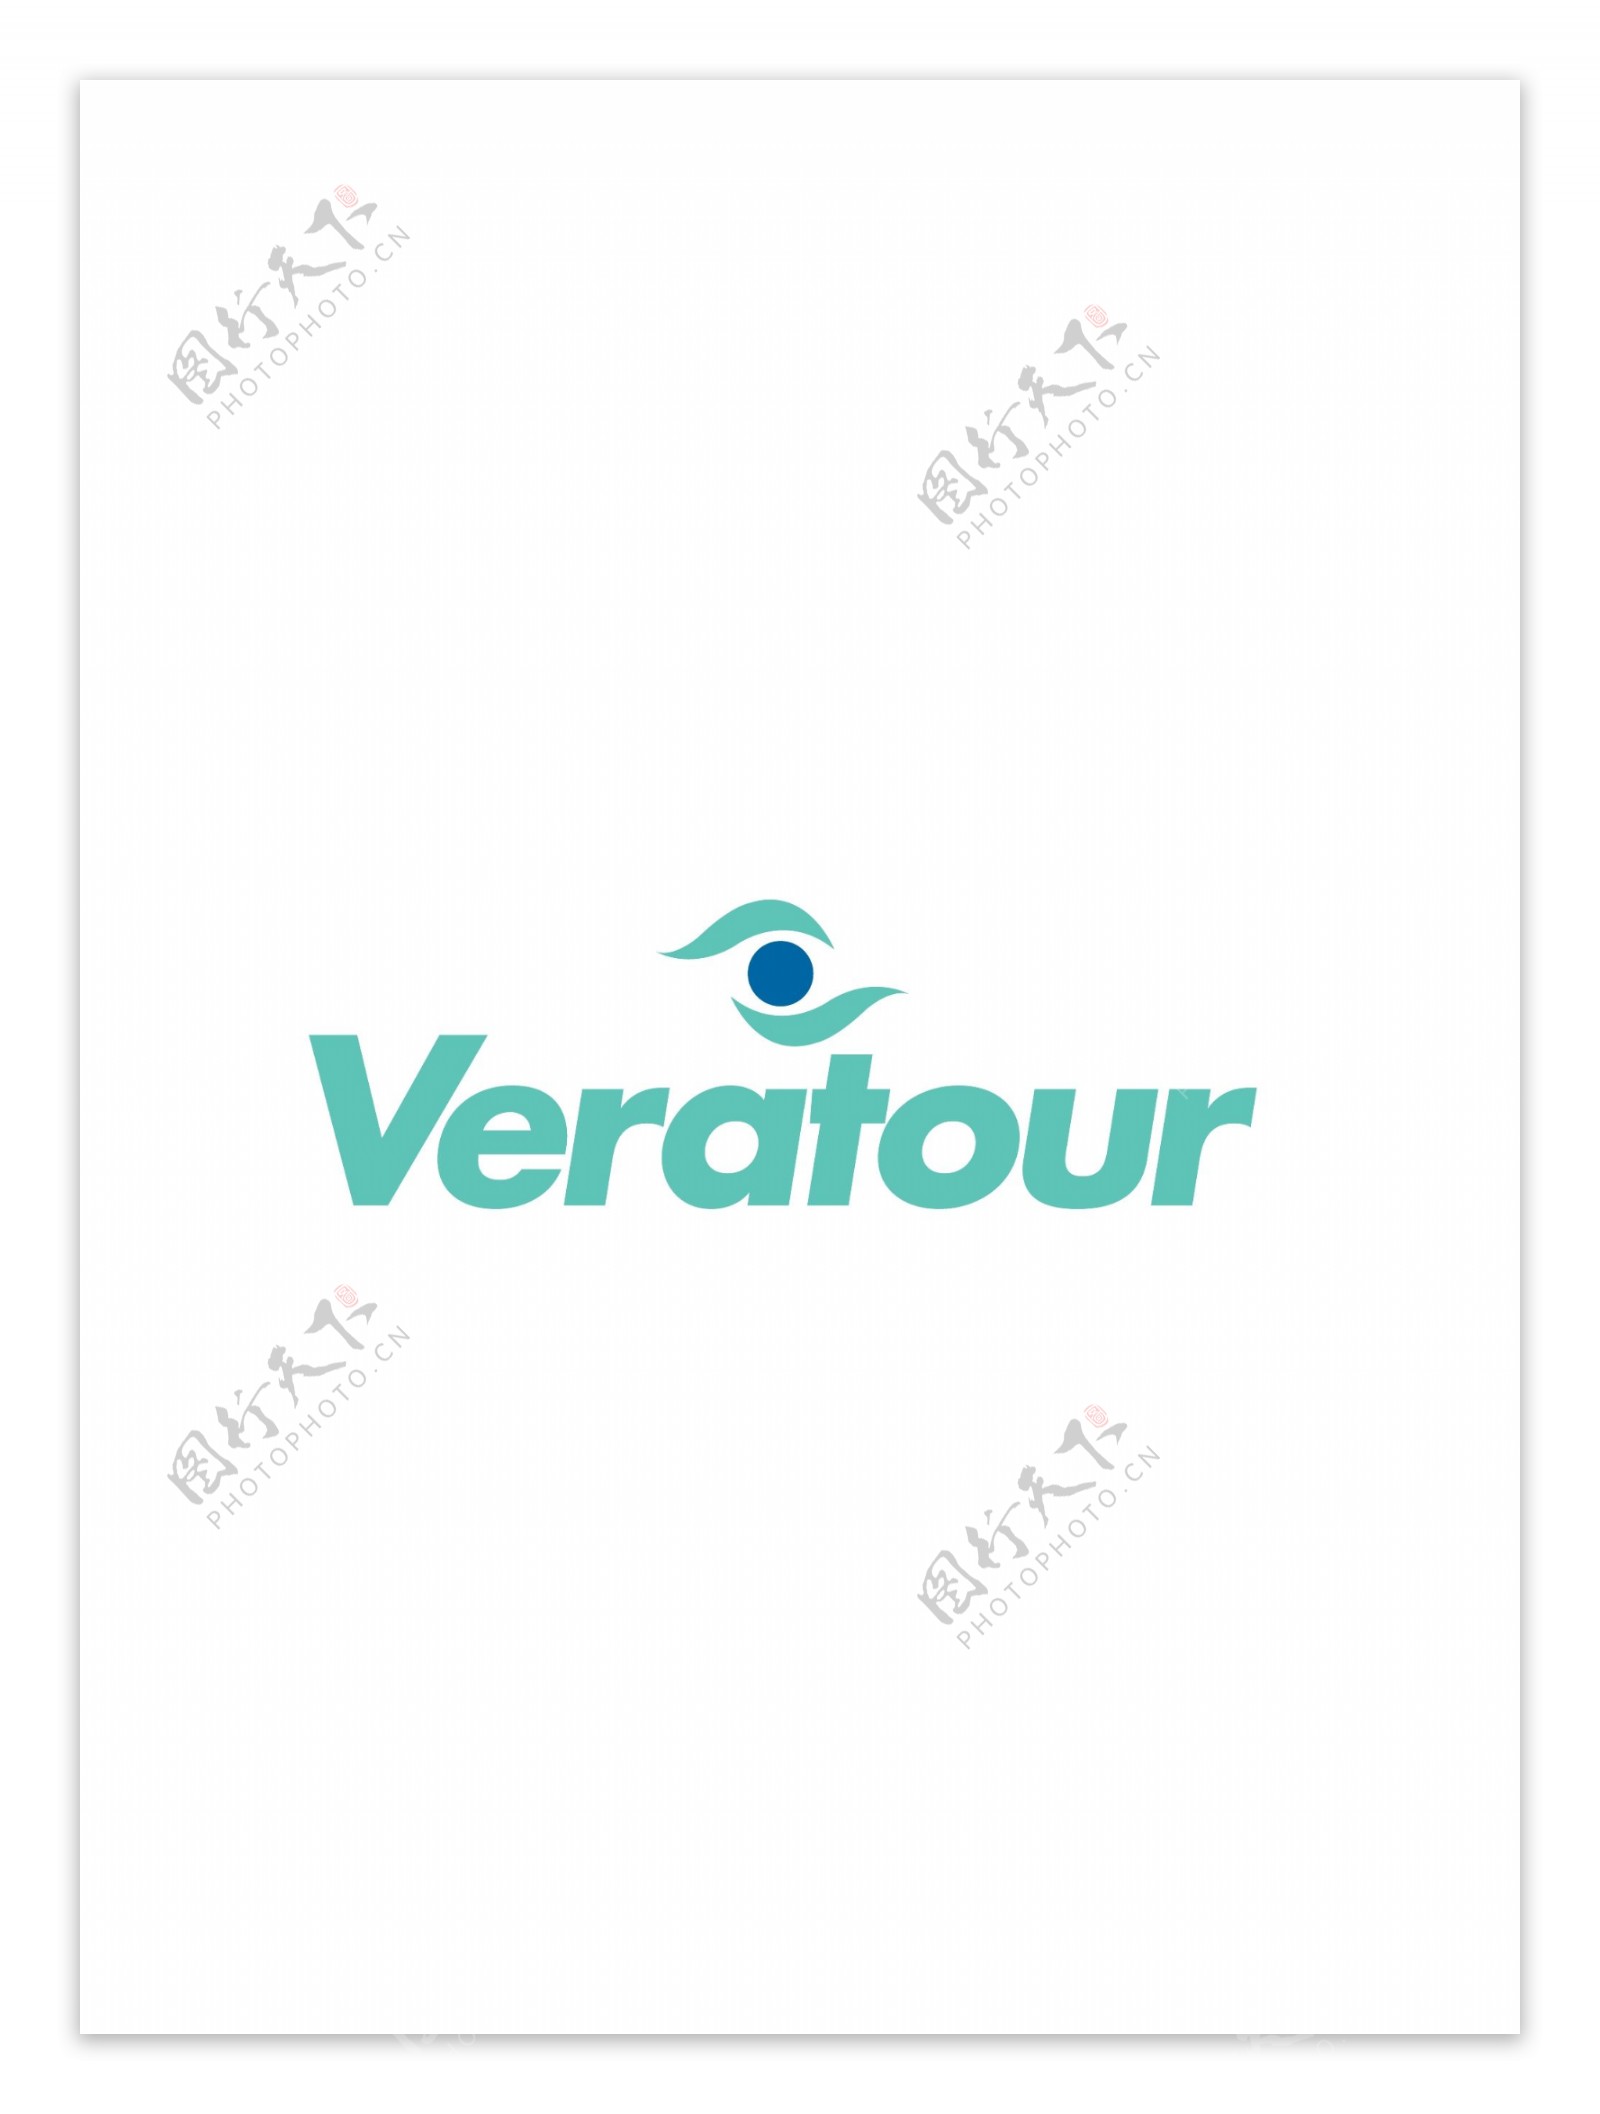 VeraTourlogo设计欣赏VeraTour旅游业LOGO下载标志设计欣赏